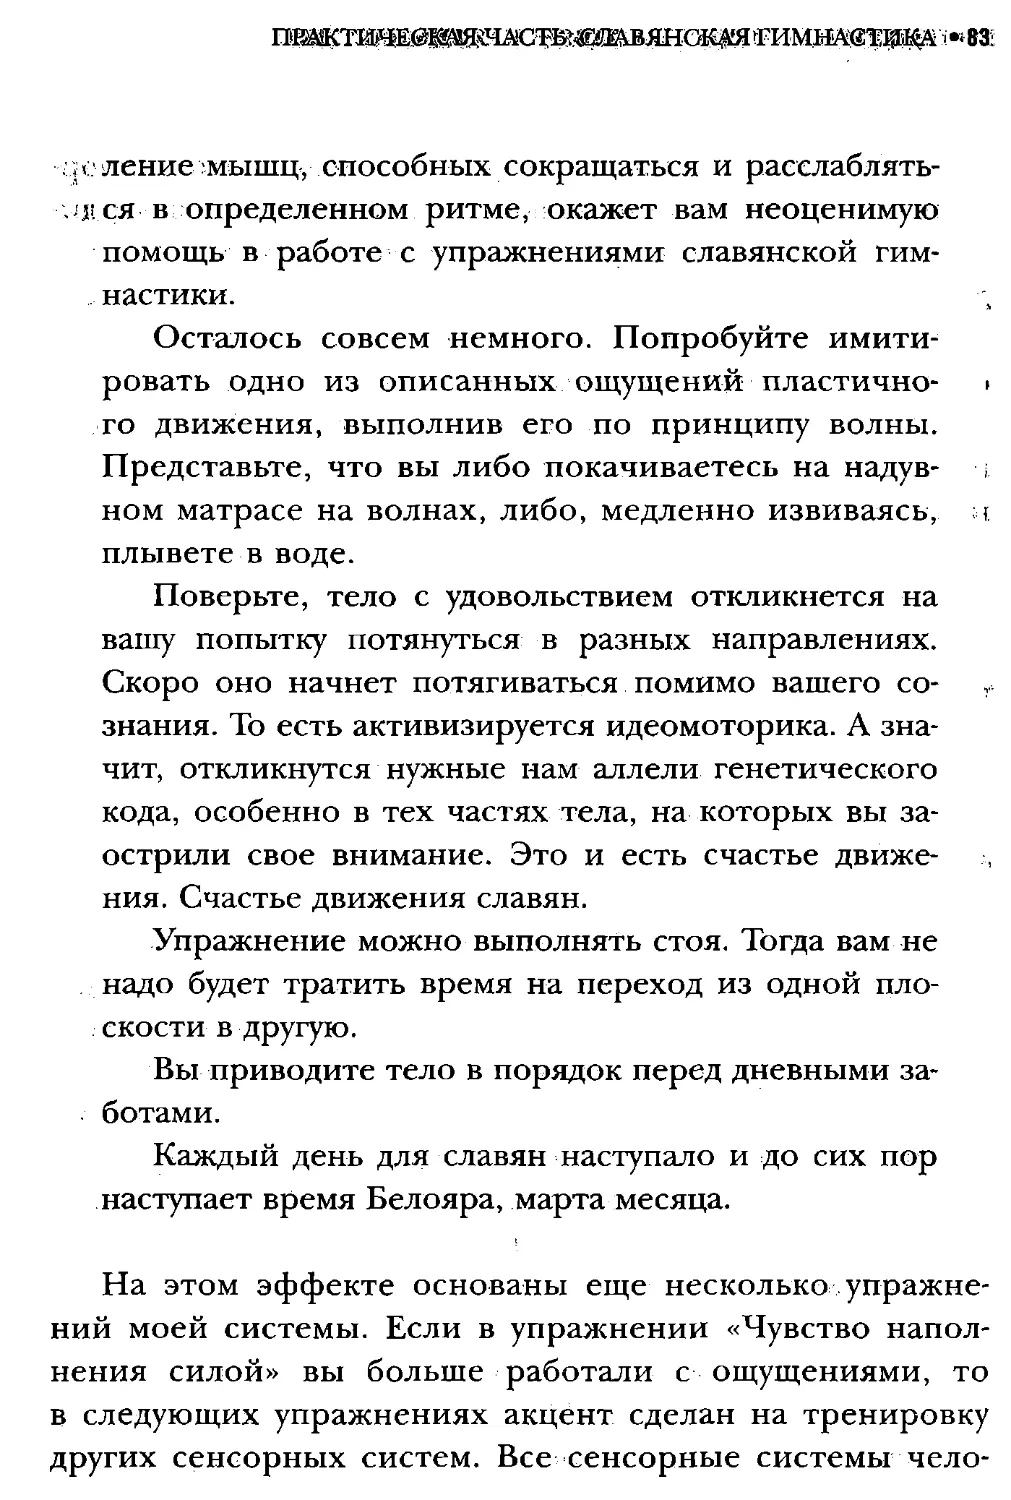 ﻿СлавянеТекст_page0041_2